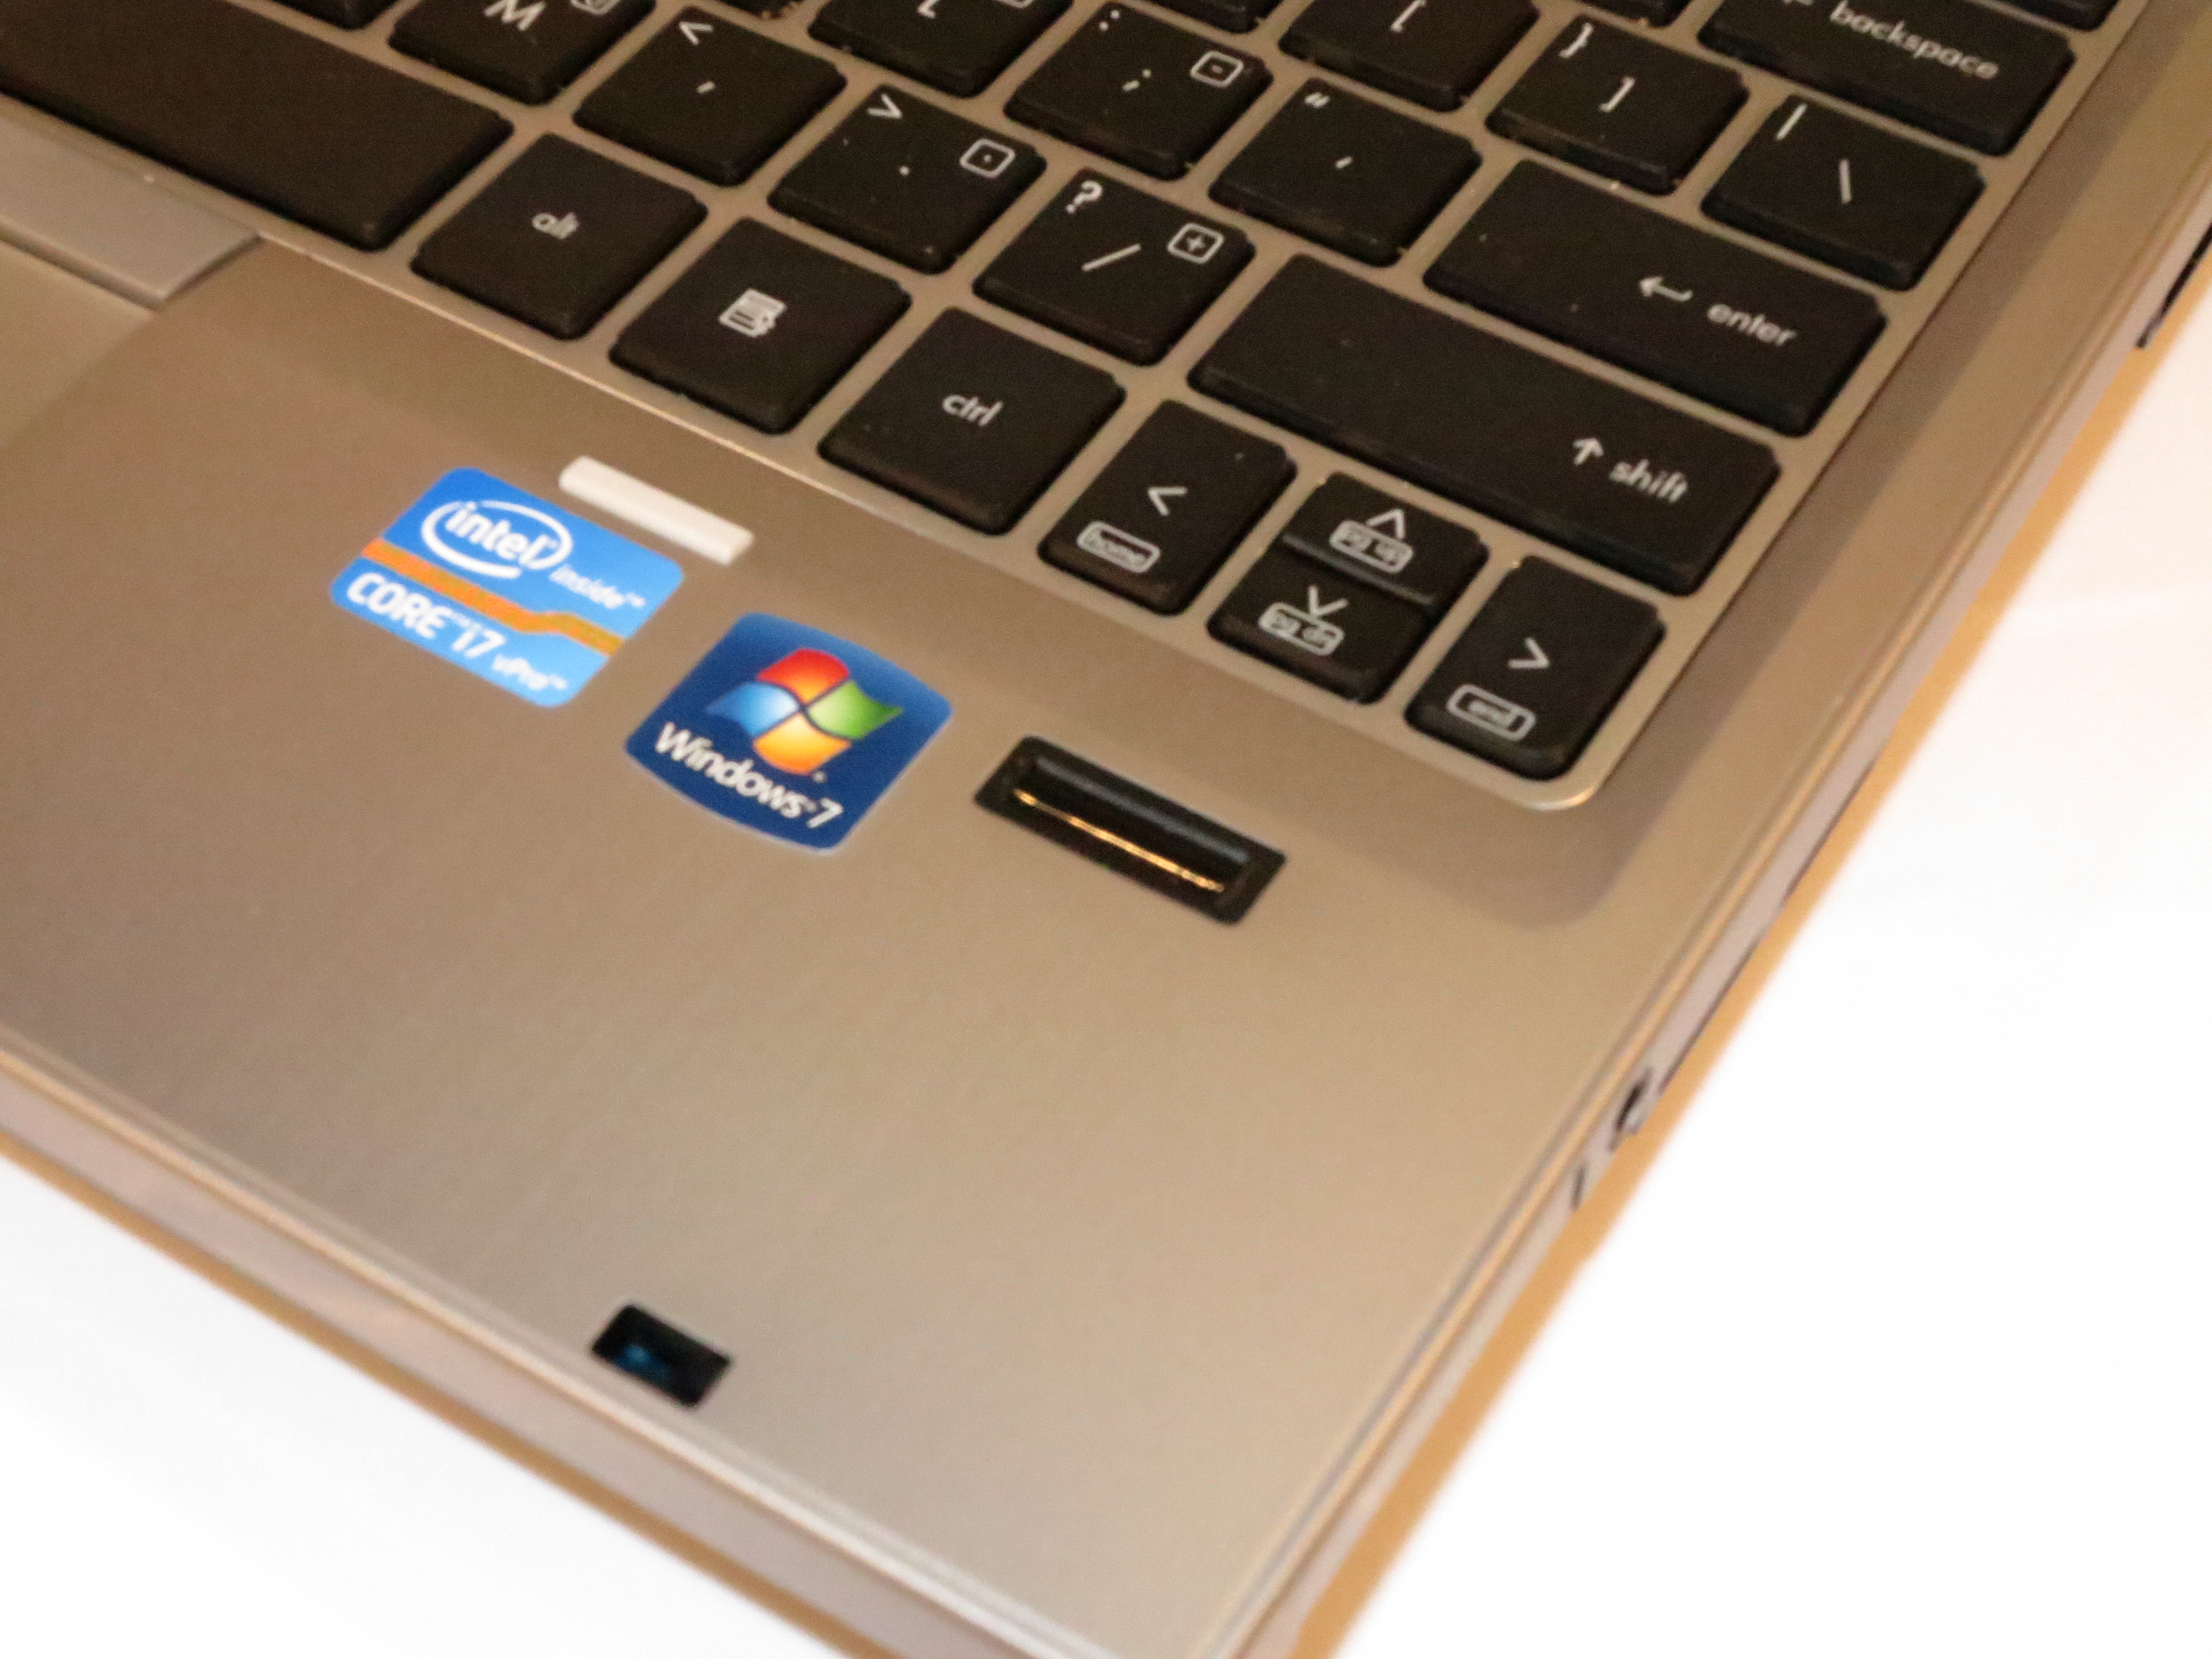 Making sure your business laptop’s fingerprint reader works with Windows 10